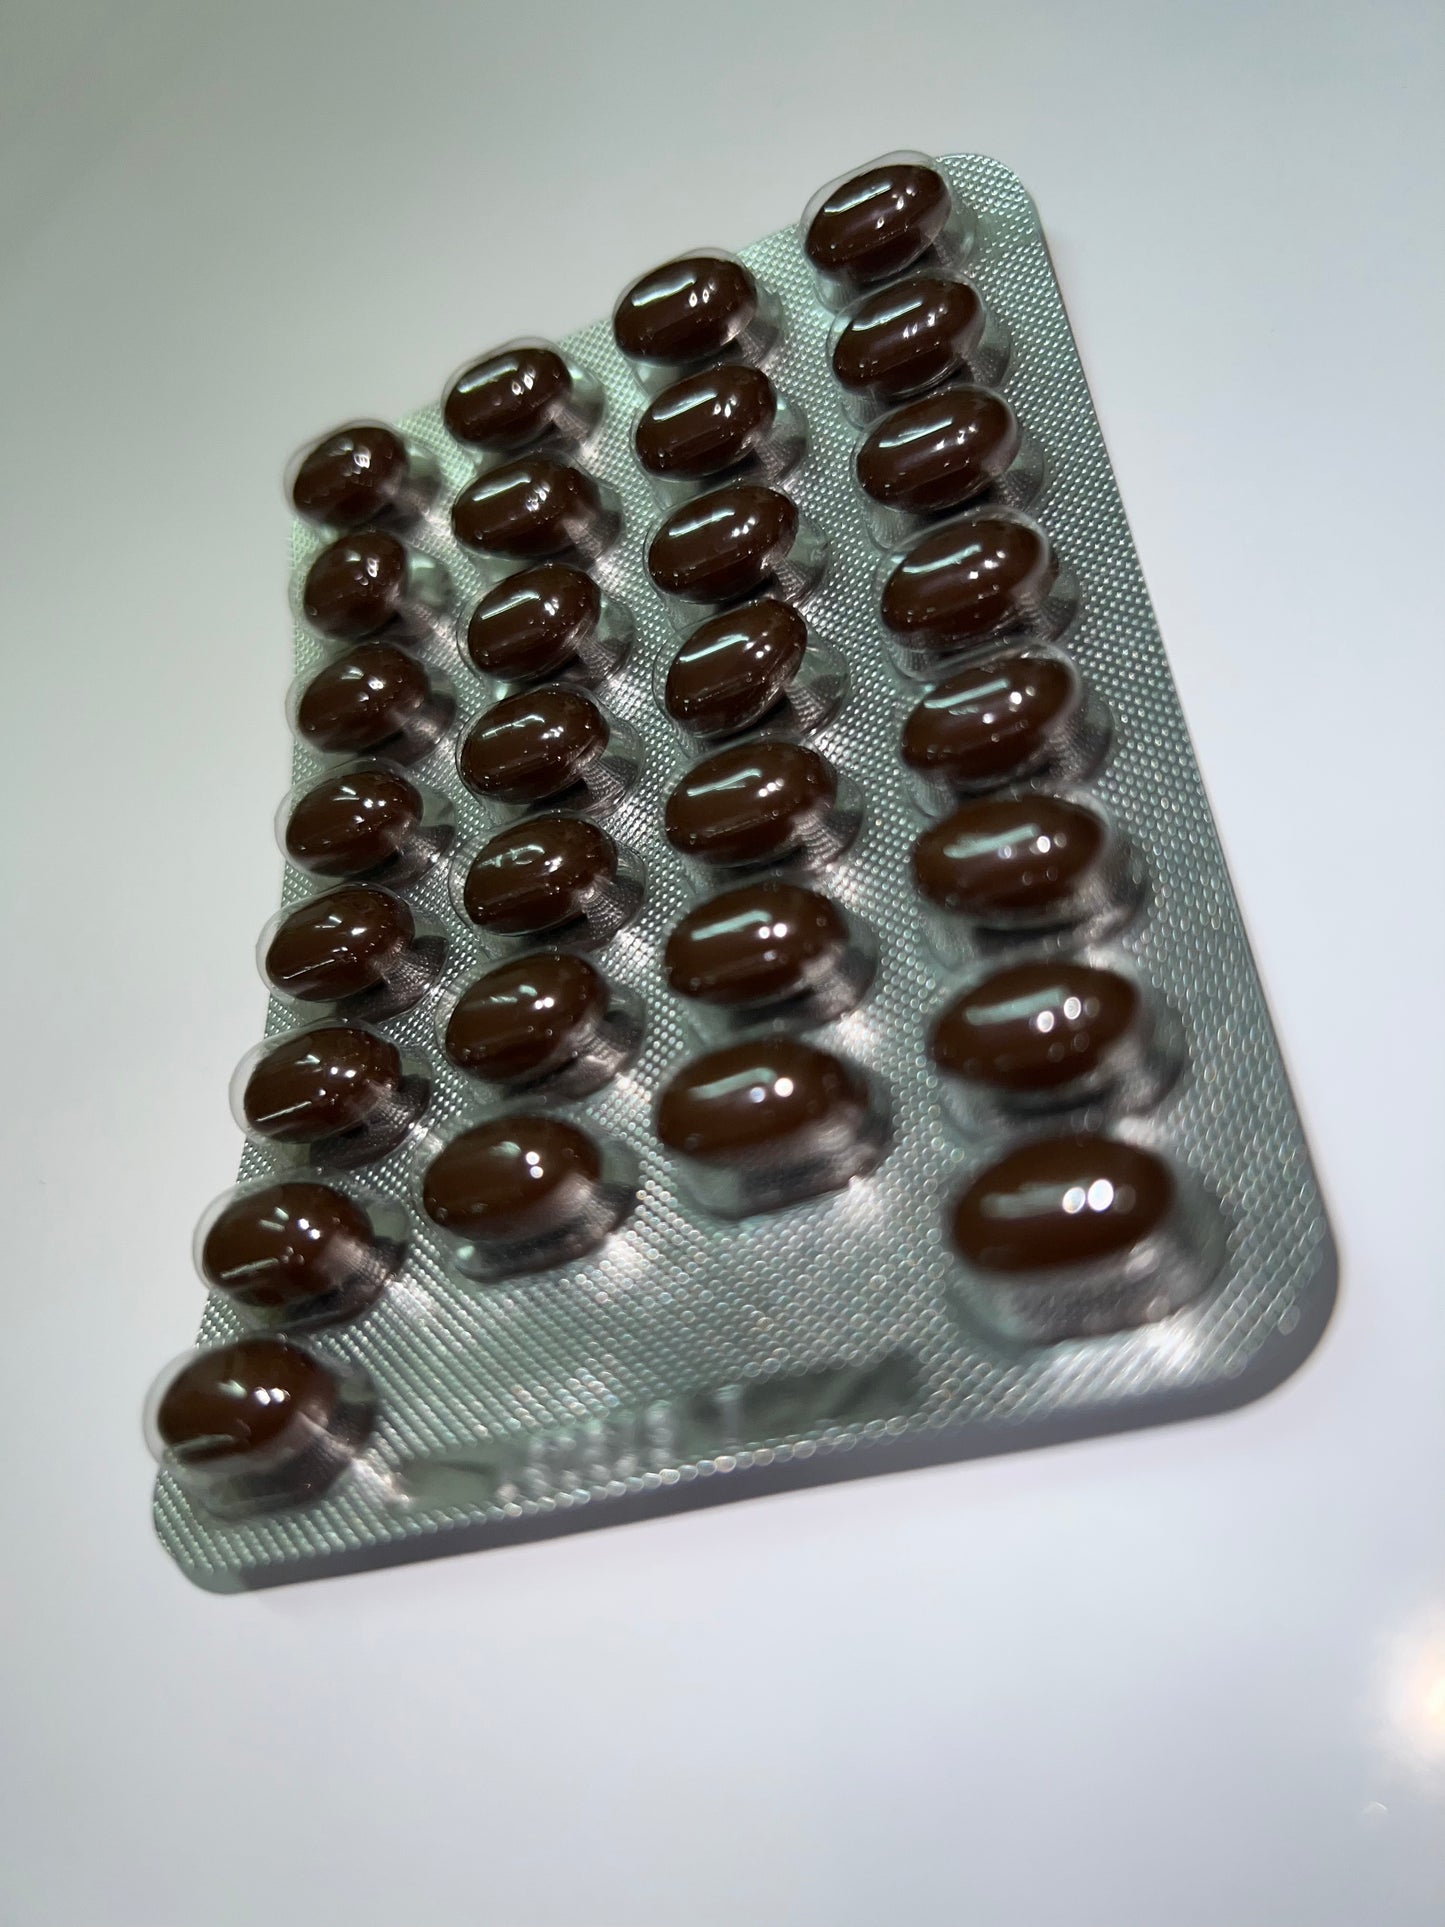 ANTHOCYAN NOMOSAN® capsules